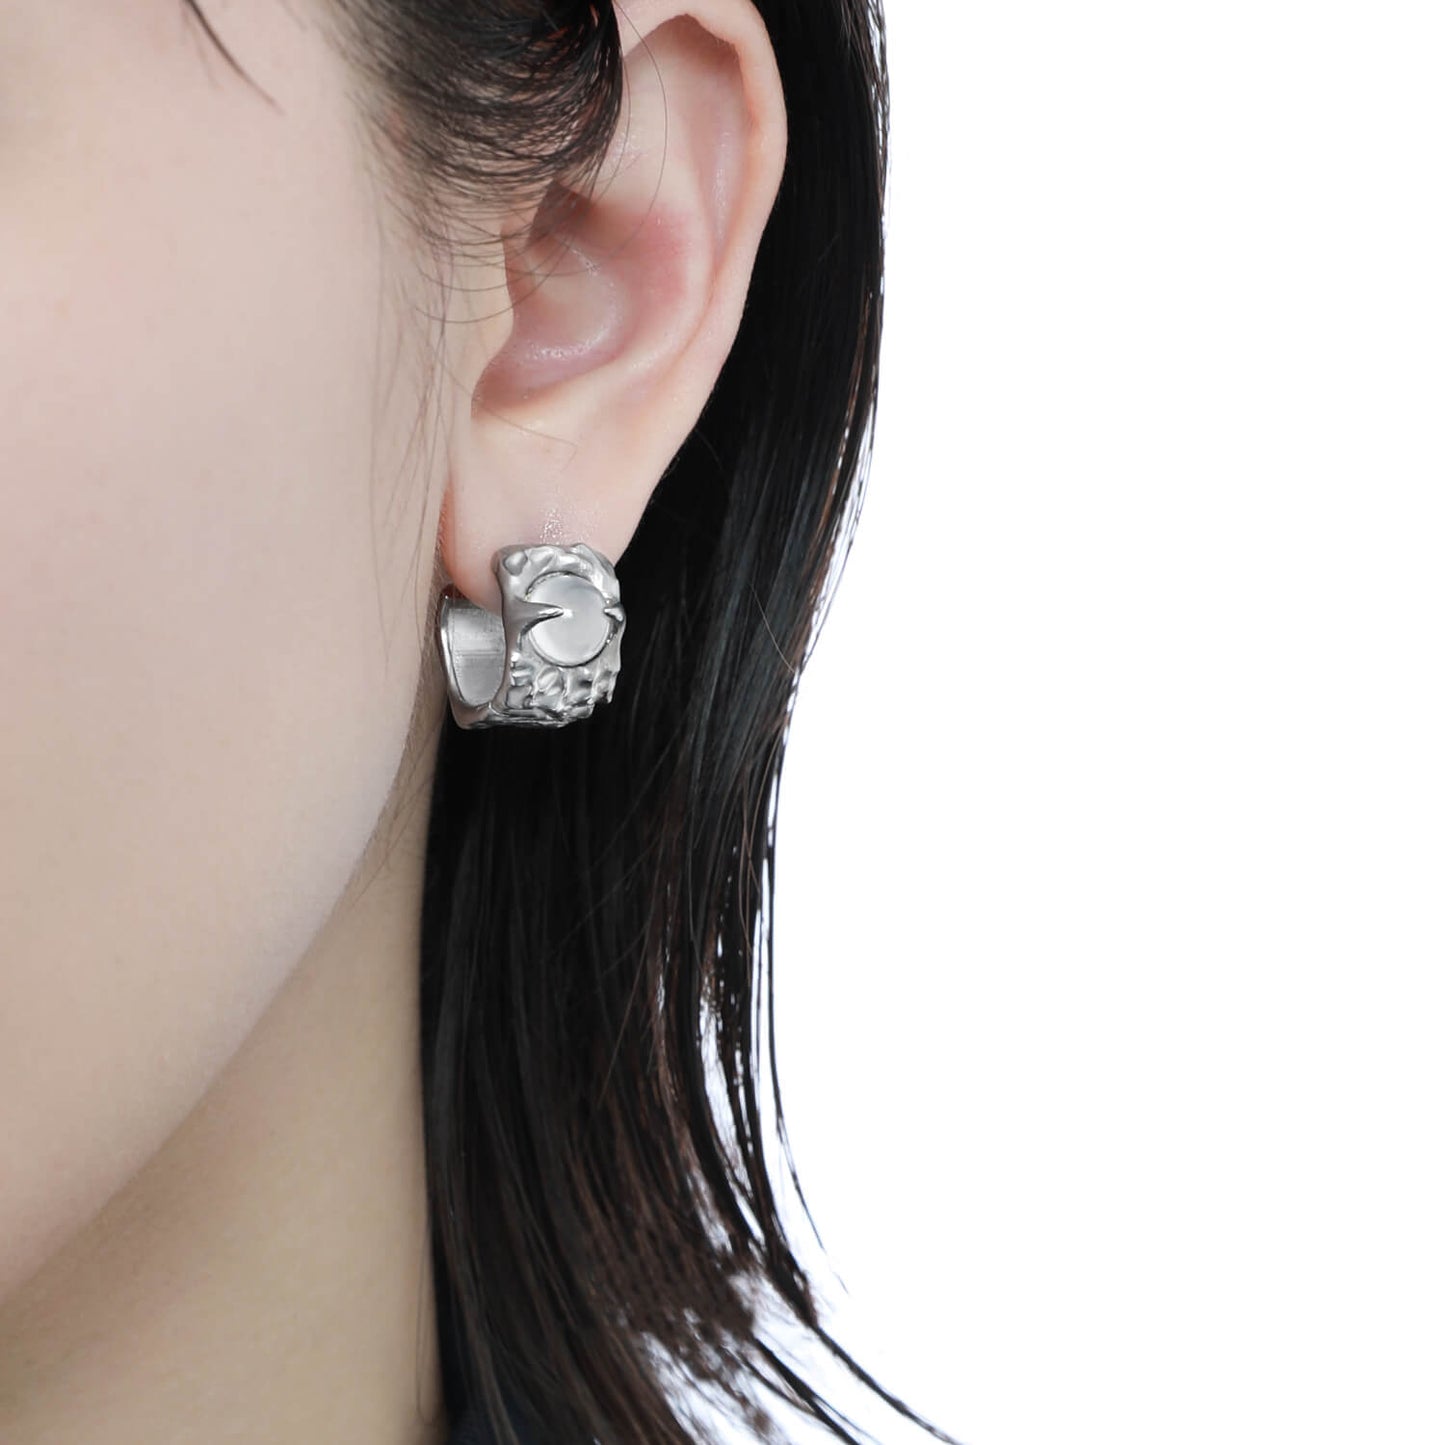 White Agate Earrings Ear Studs | Buy at Khanie